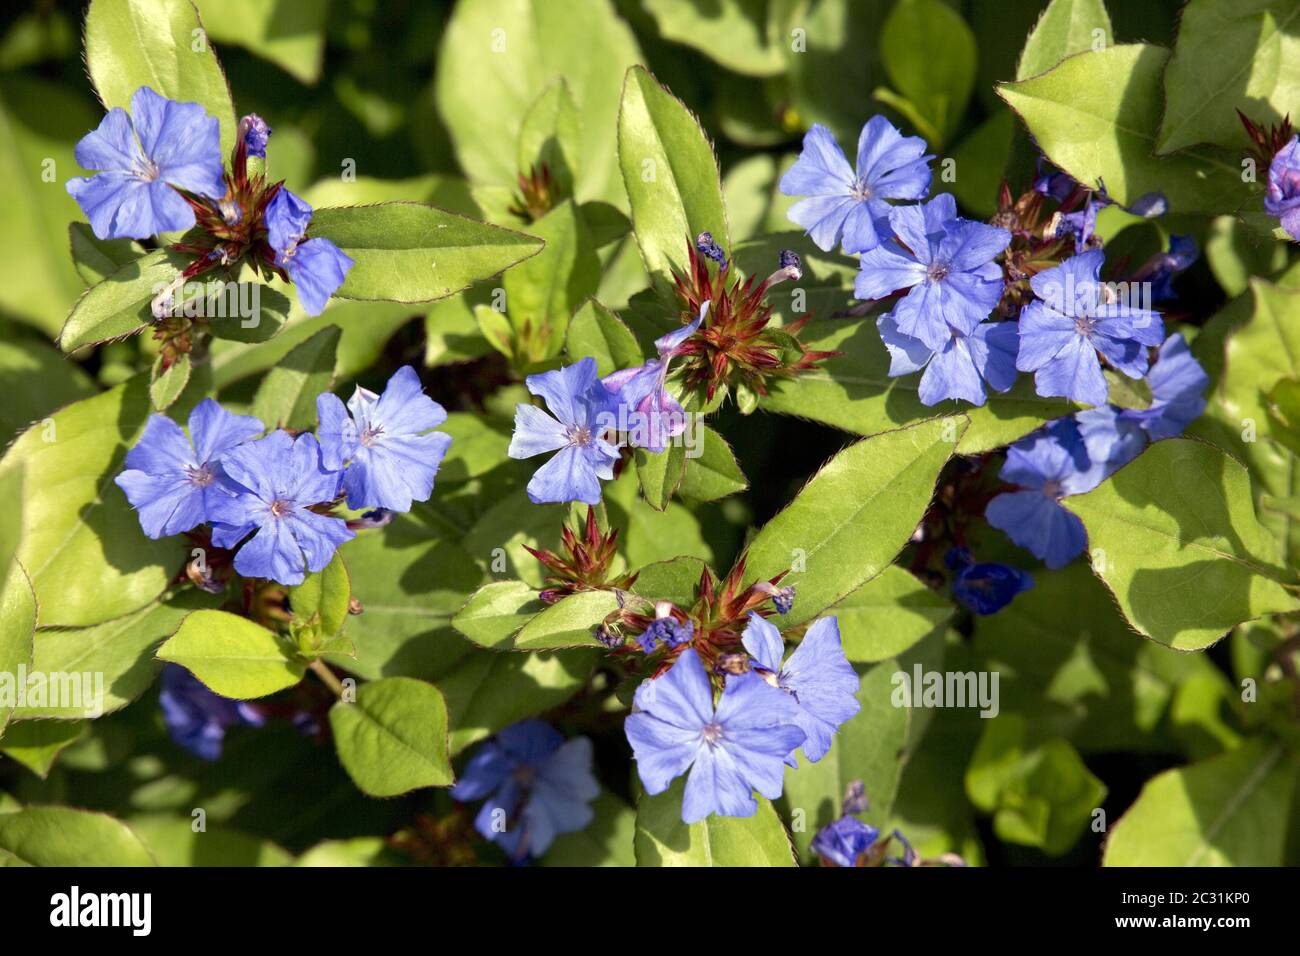 hardy blue-flowered leadwort (Ceratostigma plumbaginoides) in the botanical garden Stock Photo